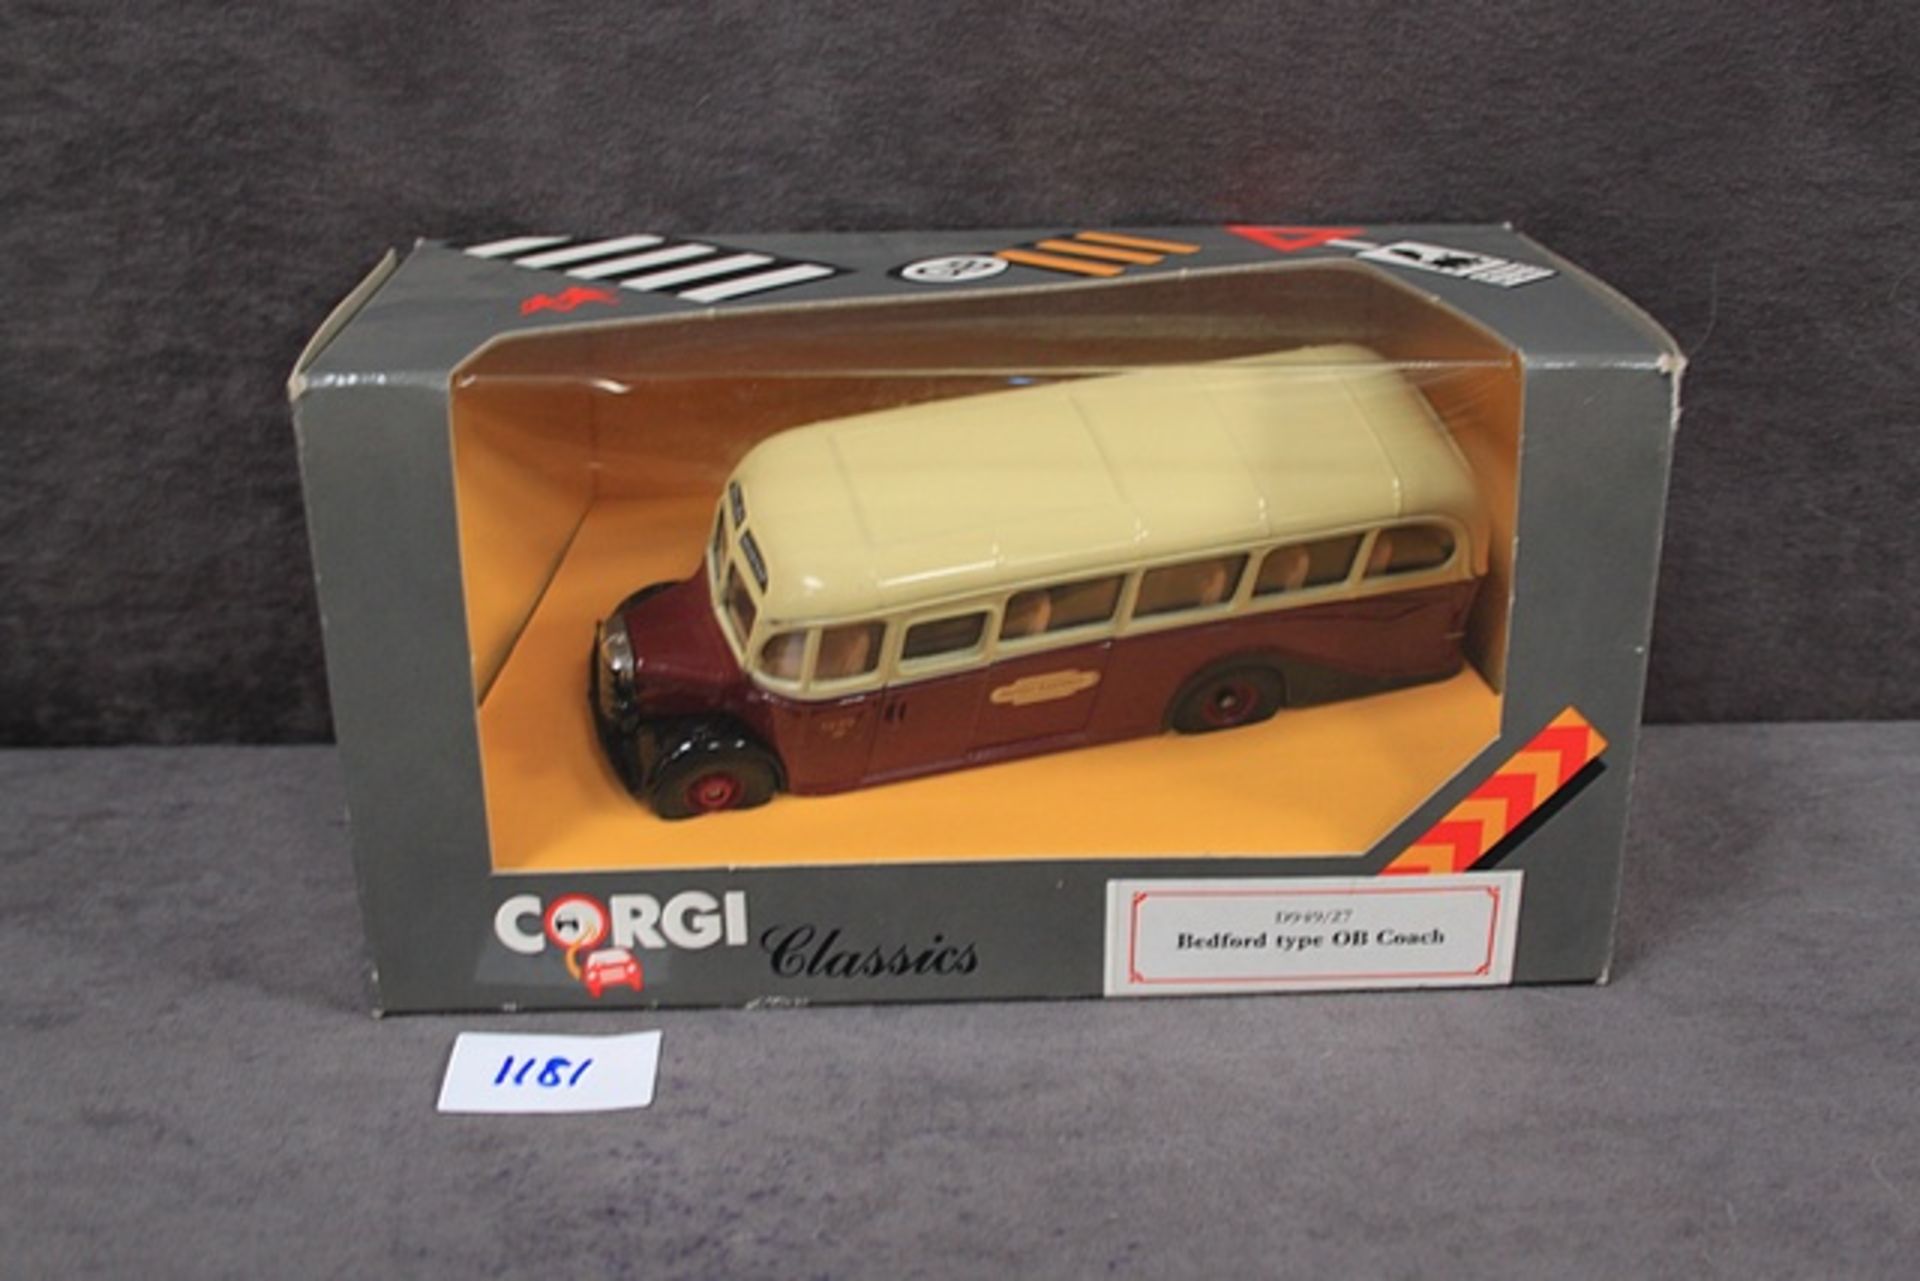 Corgi diecast Classics #D949/27 Bedford Type OB Coach in box